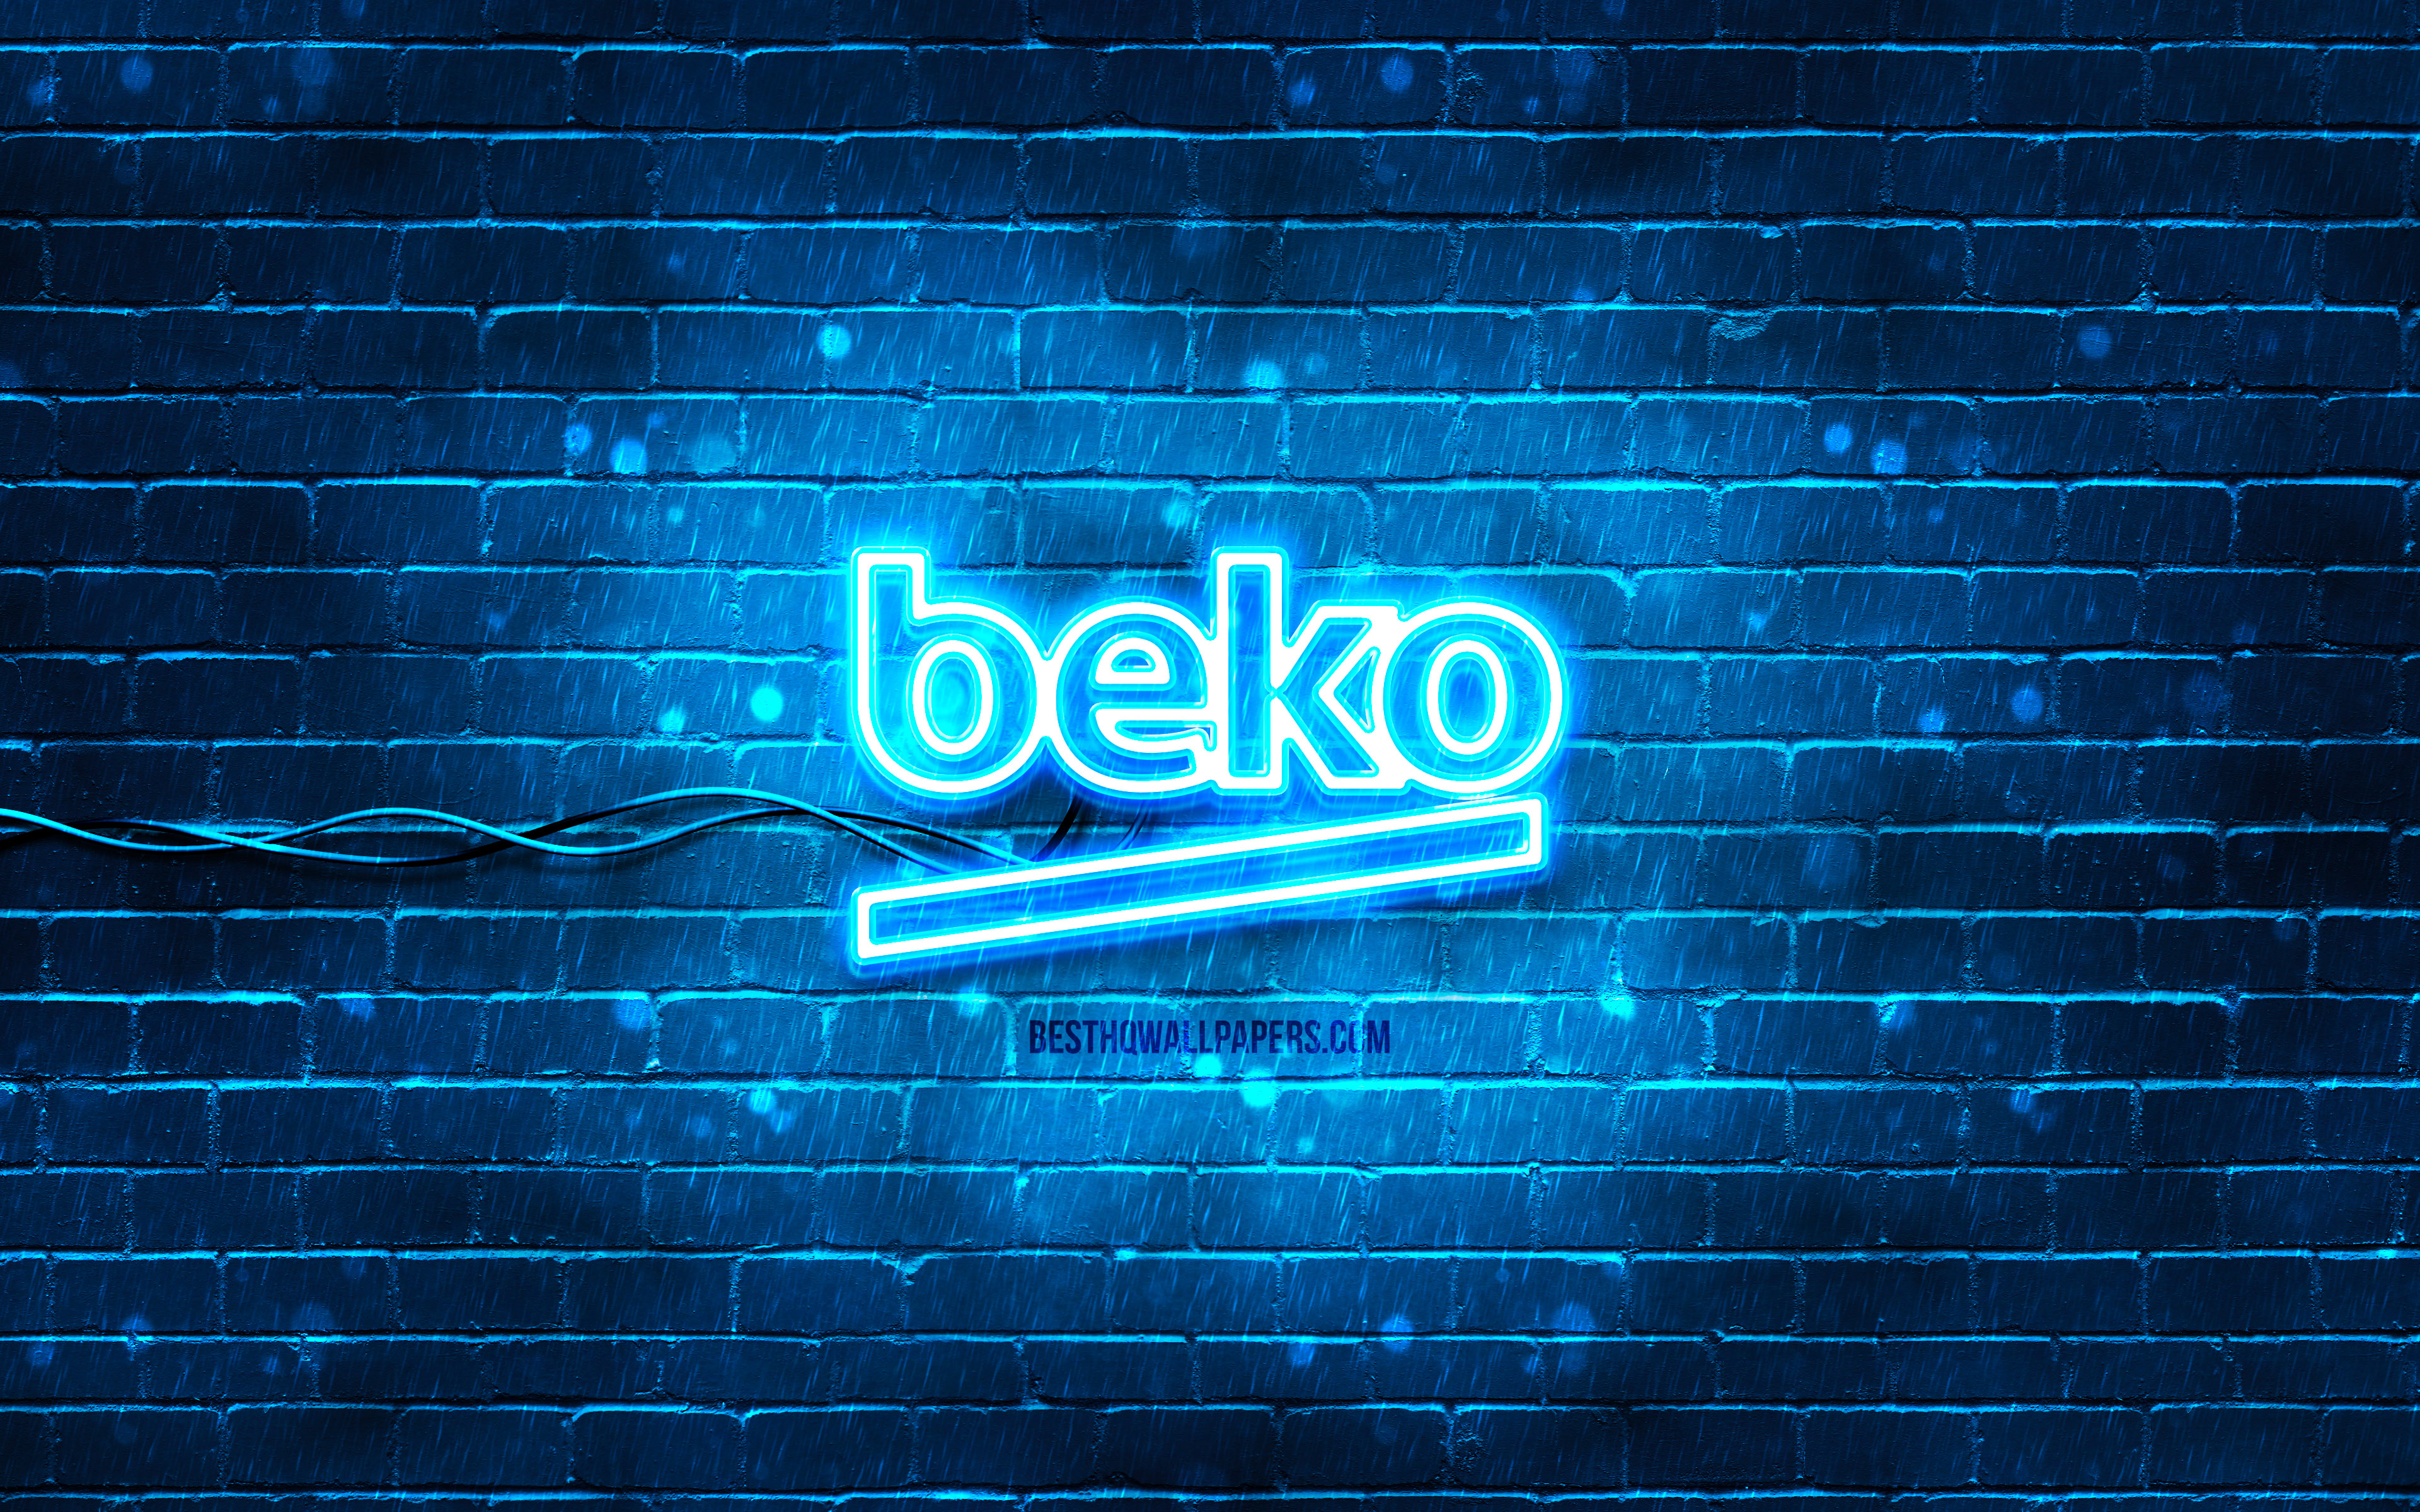 Download wallpaper Beko blue logo, 4k, blue brickwall, Beko logo, brands, Beko neon logo, Beko for desktop with resolution 3840x2400. High Quality HD picture wallpaper